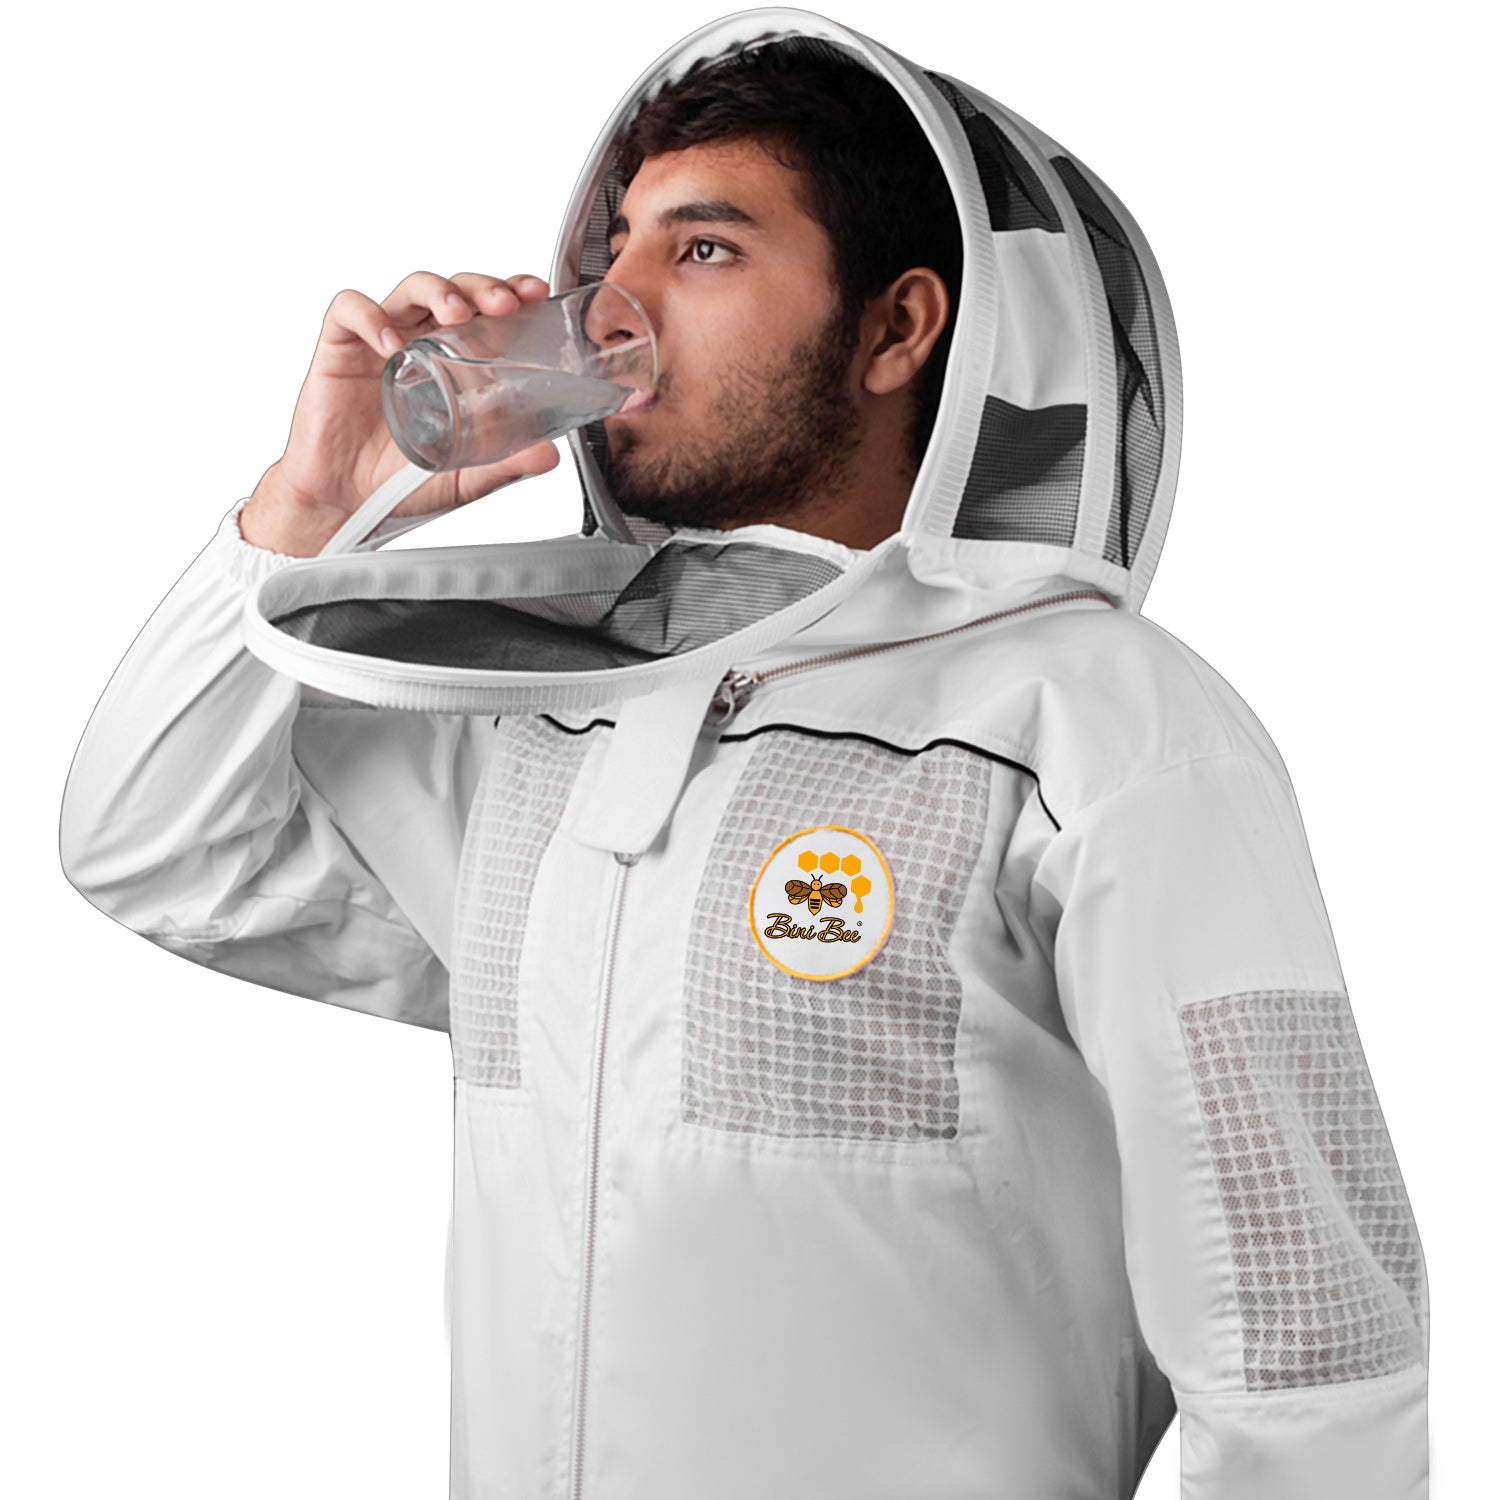 Beekeeping Bee Cotton Semi Ventilated Jacket With Hood Style Veil Protective Gear Bini Bees